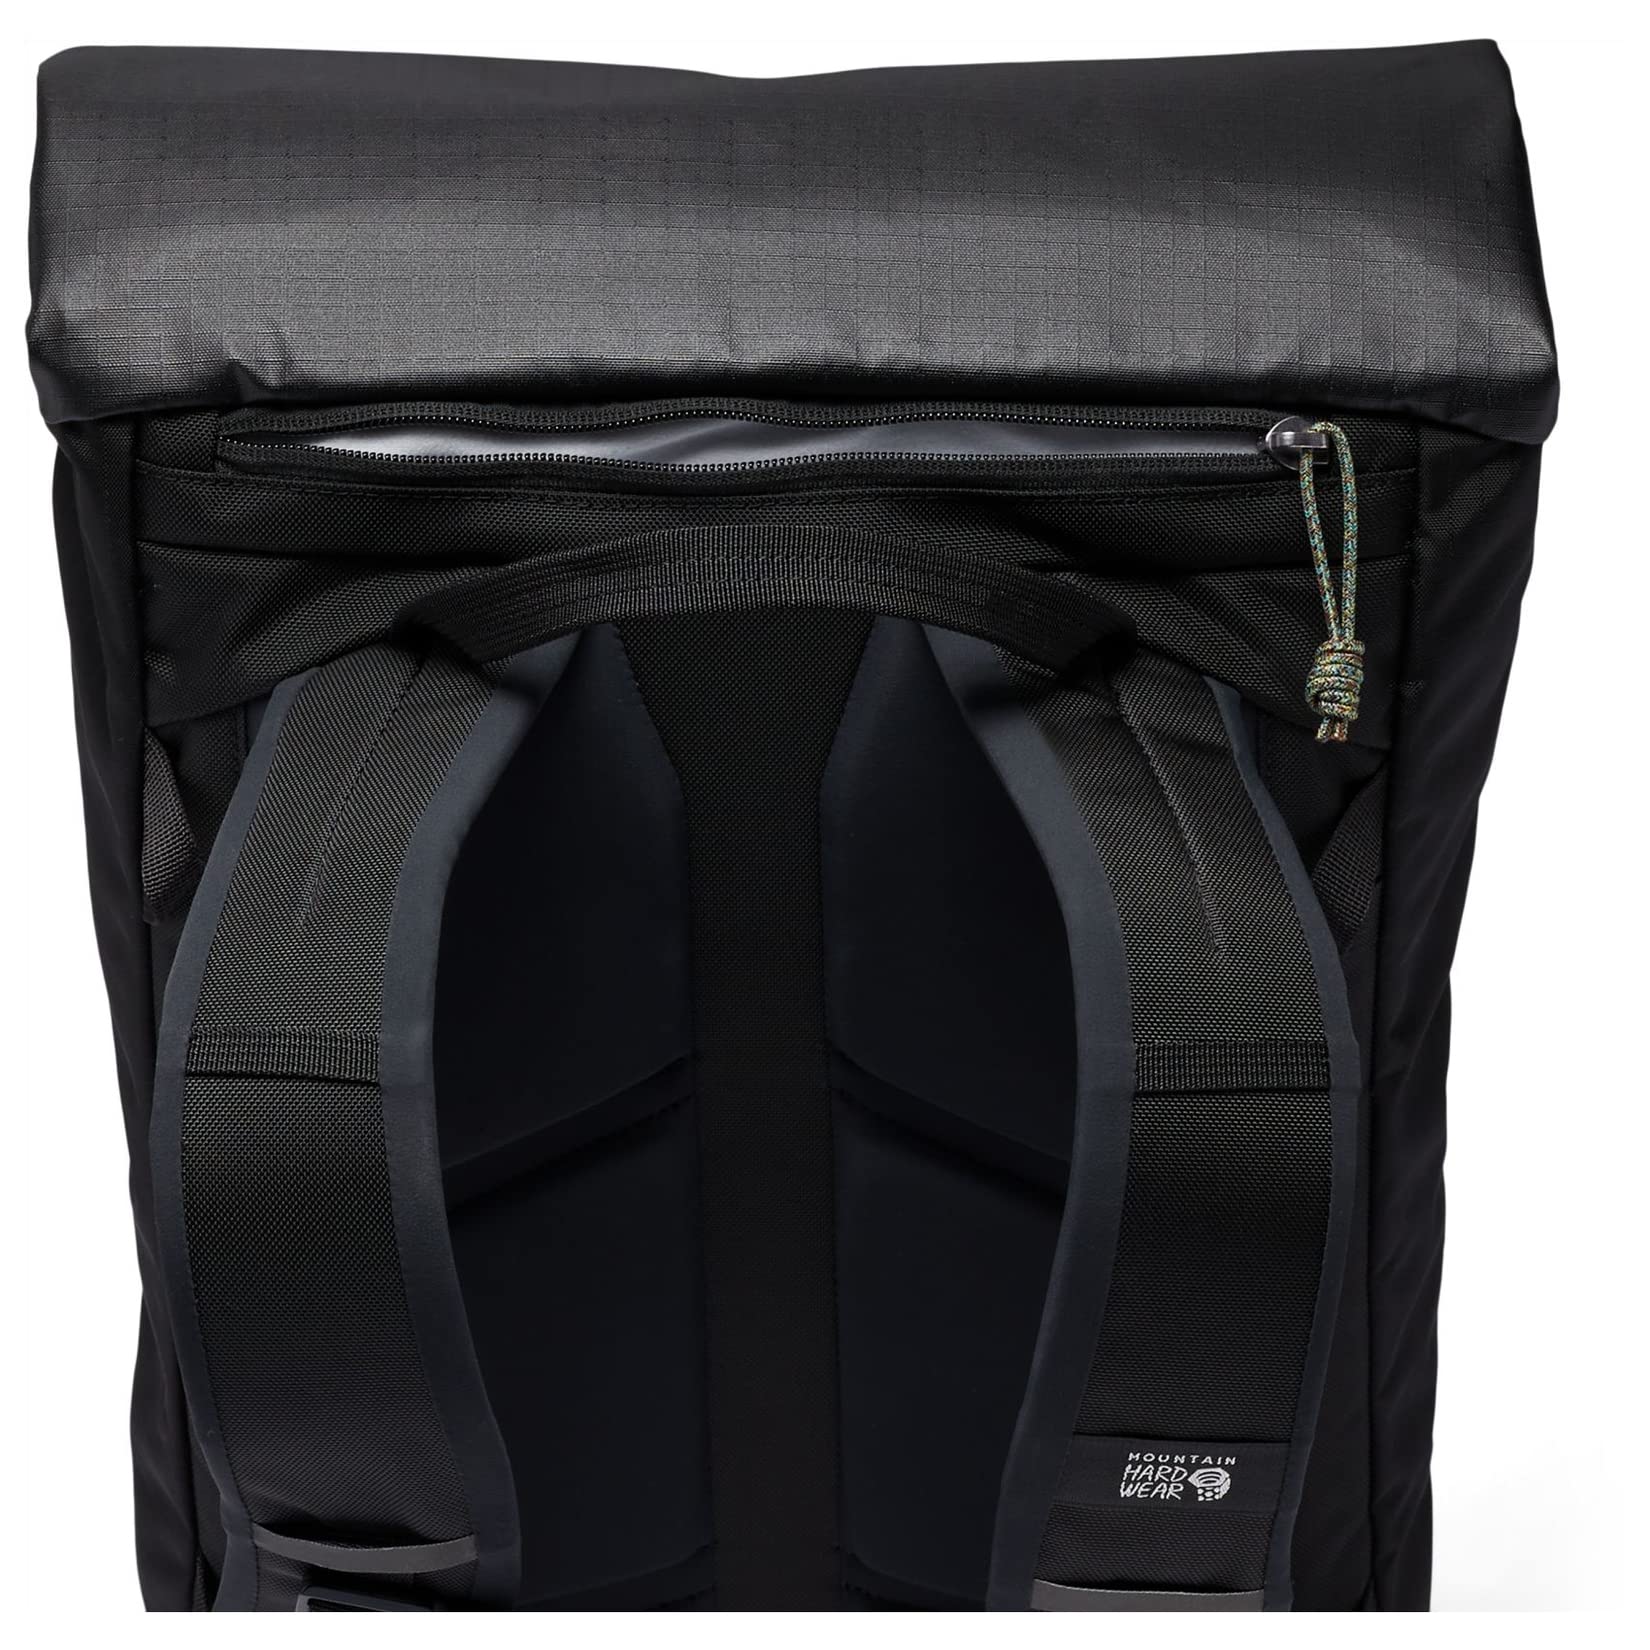 Mountain Hardwear Camp 4 25L Backpack, Black, One Size